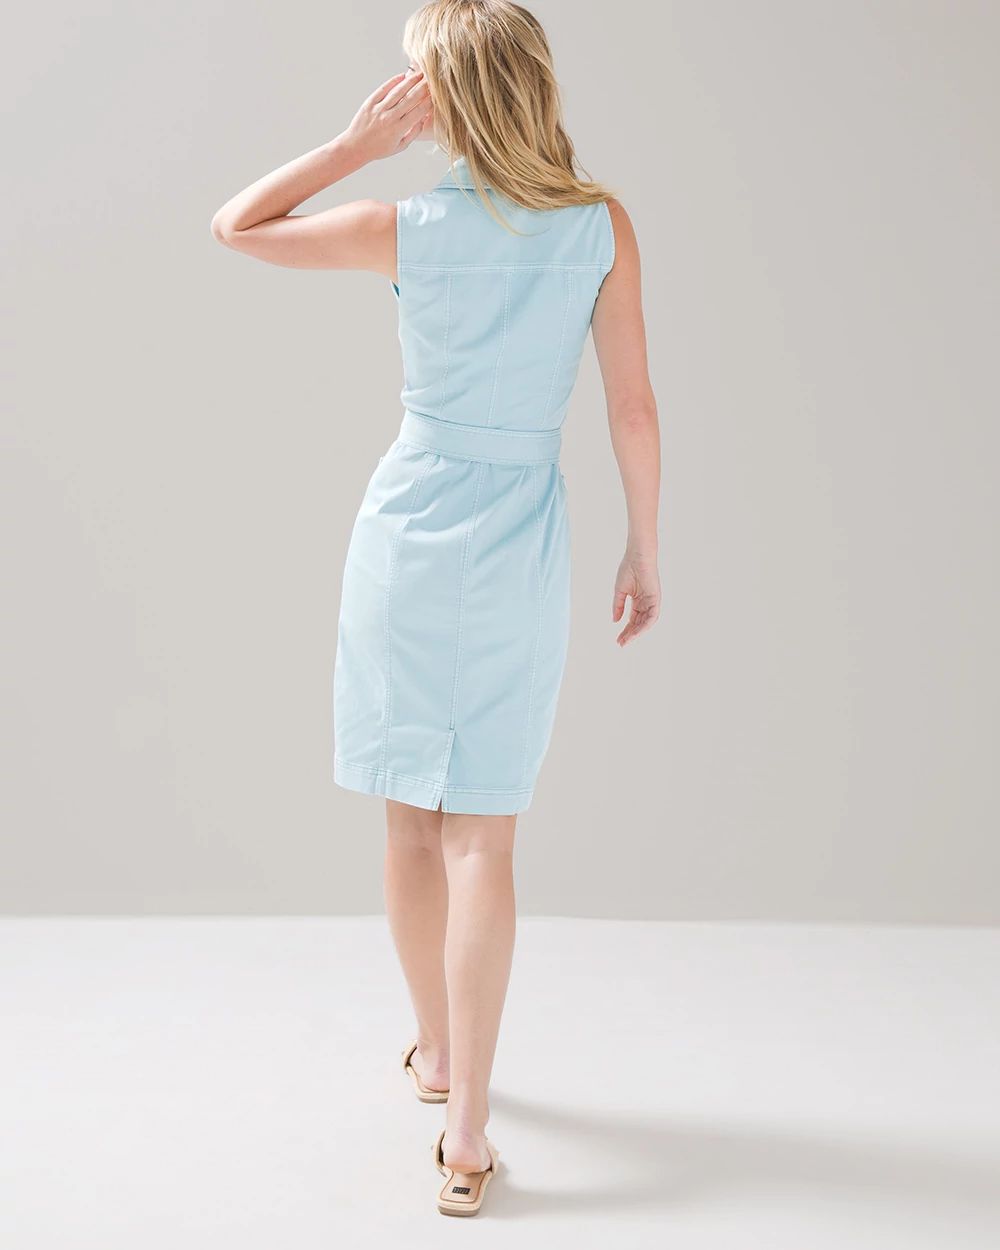 Sleeveless Pret-A-Pedi Dress click to view larger image.